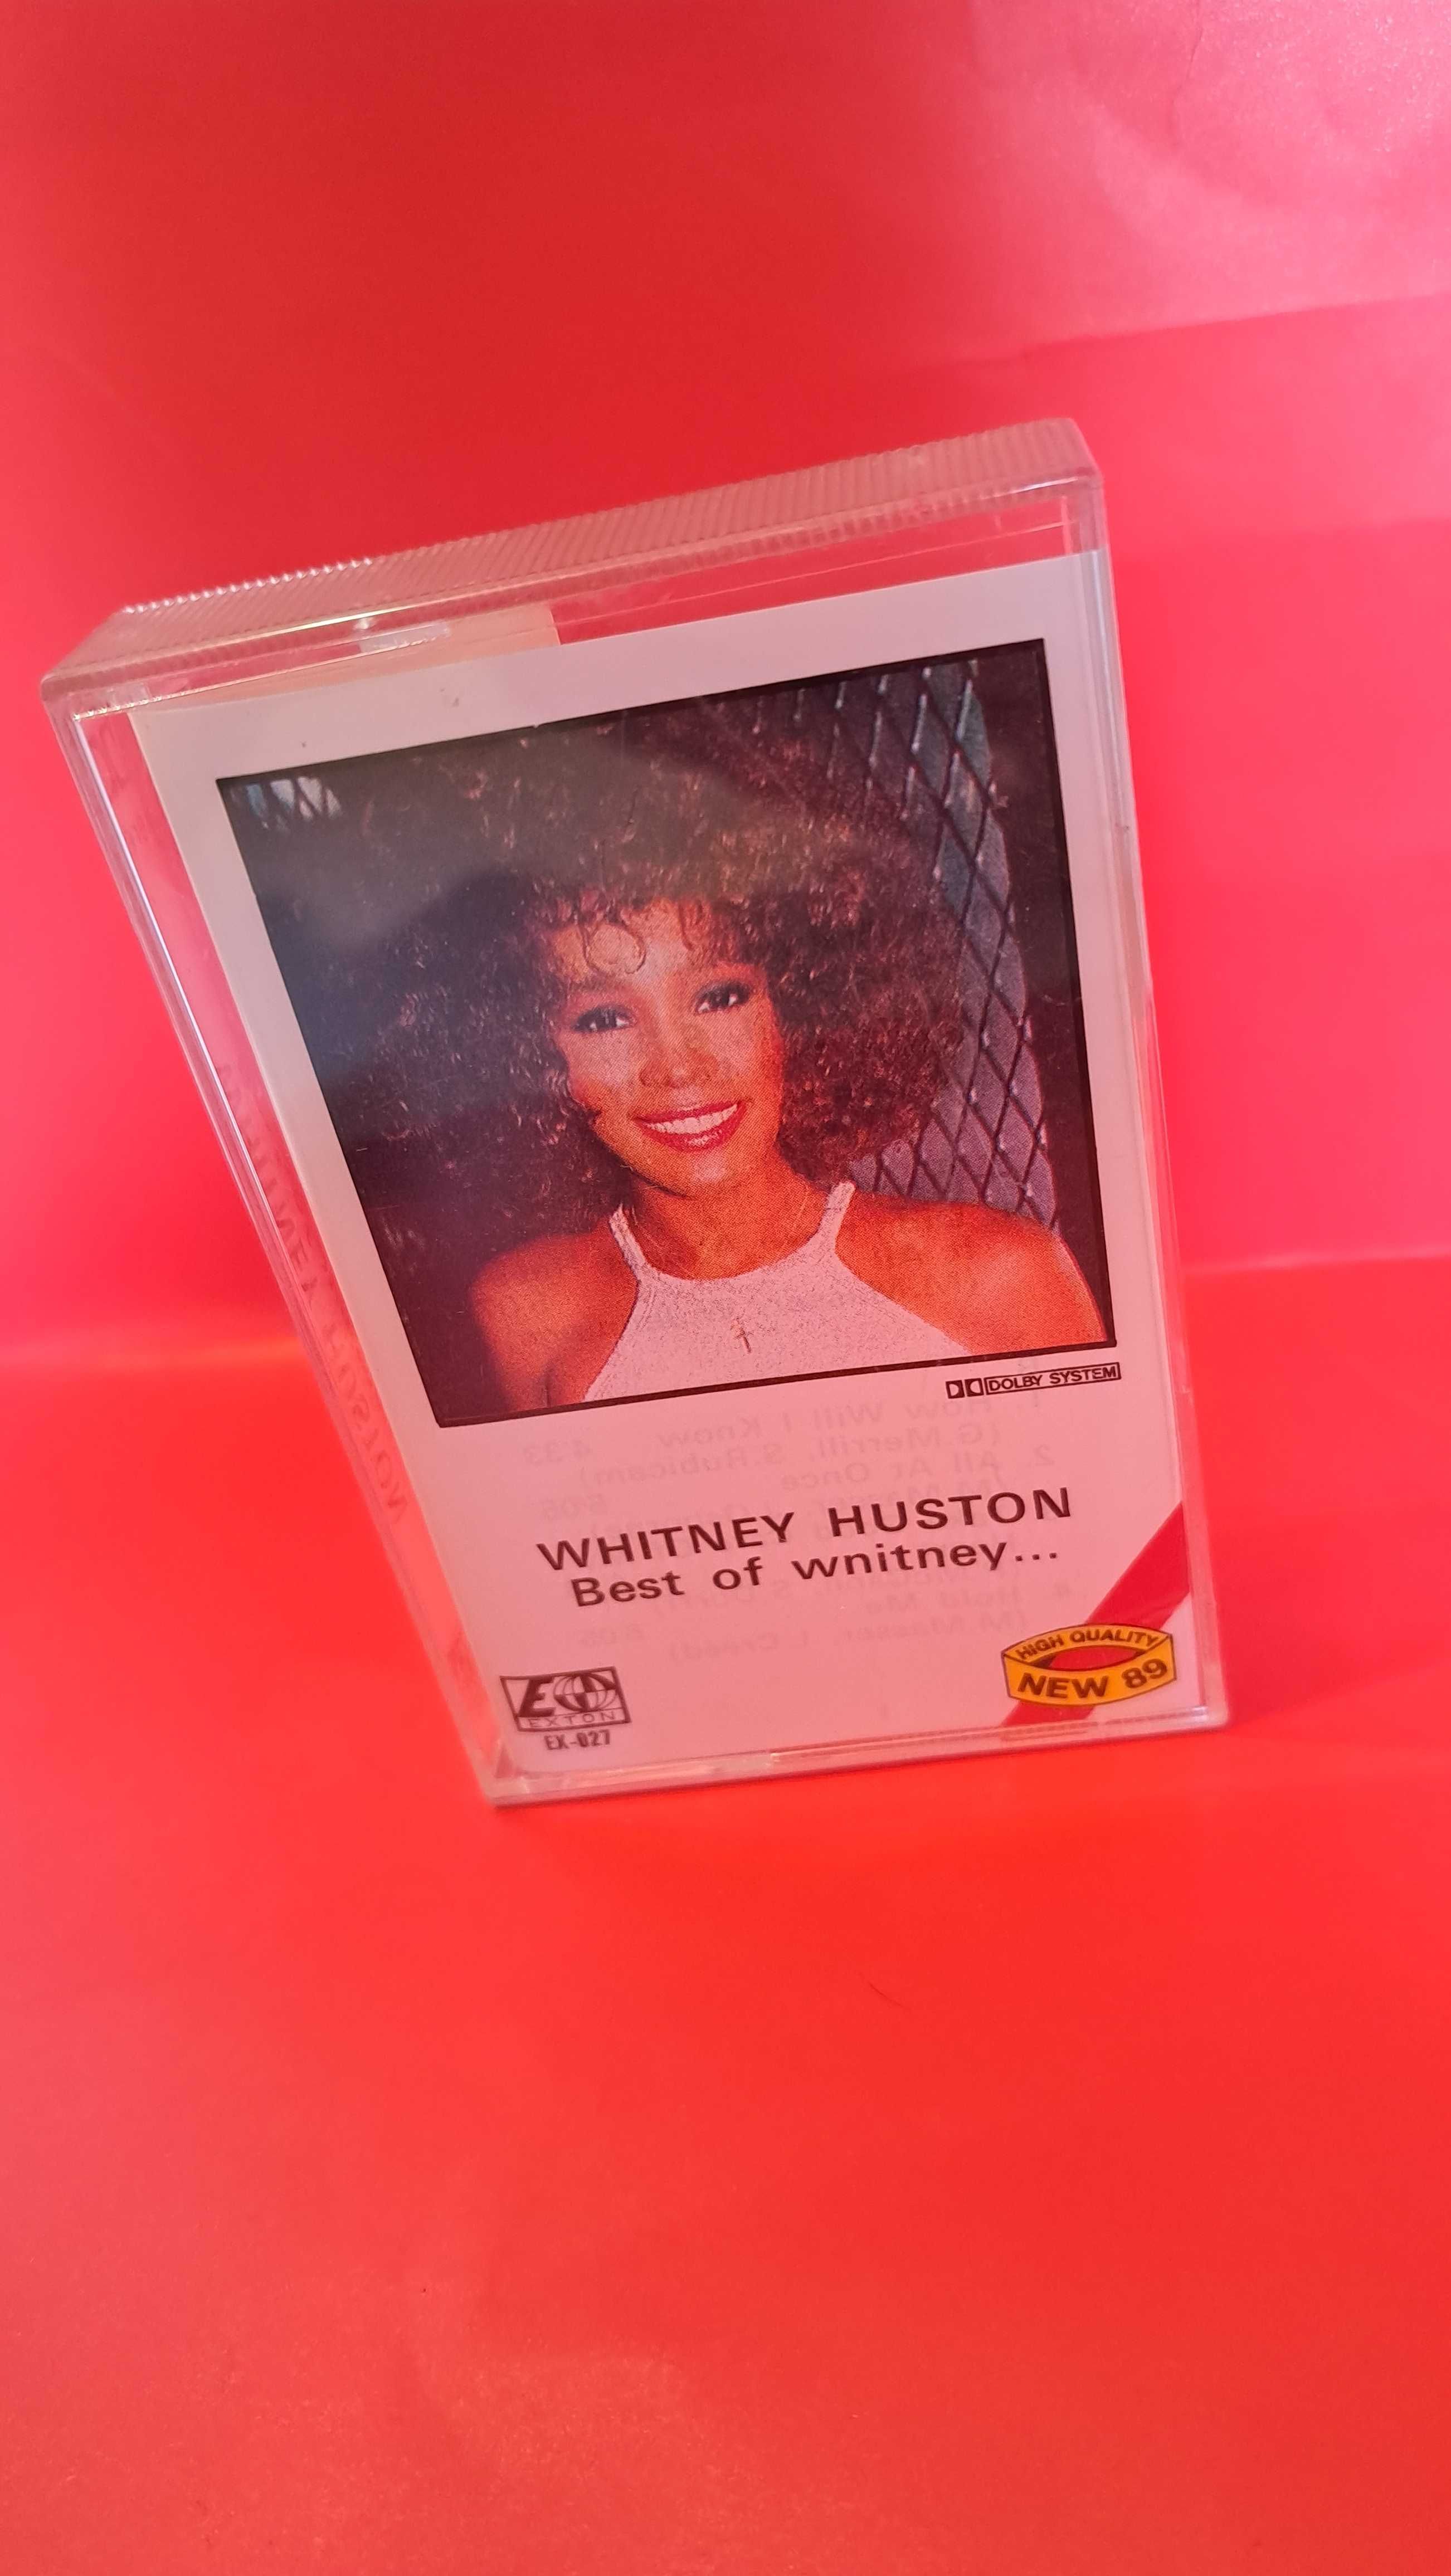 WHitney Huston best of wnitney kaseta audio